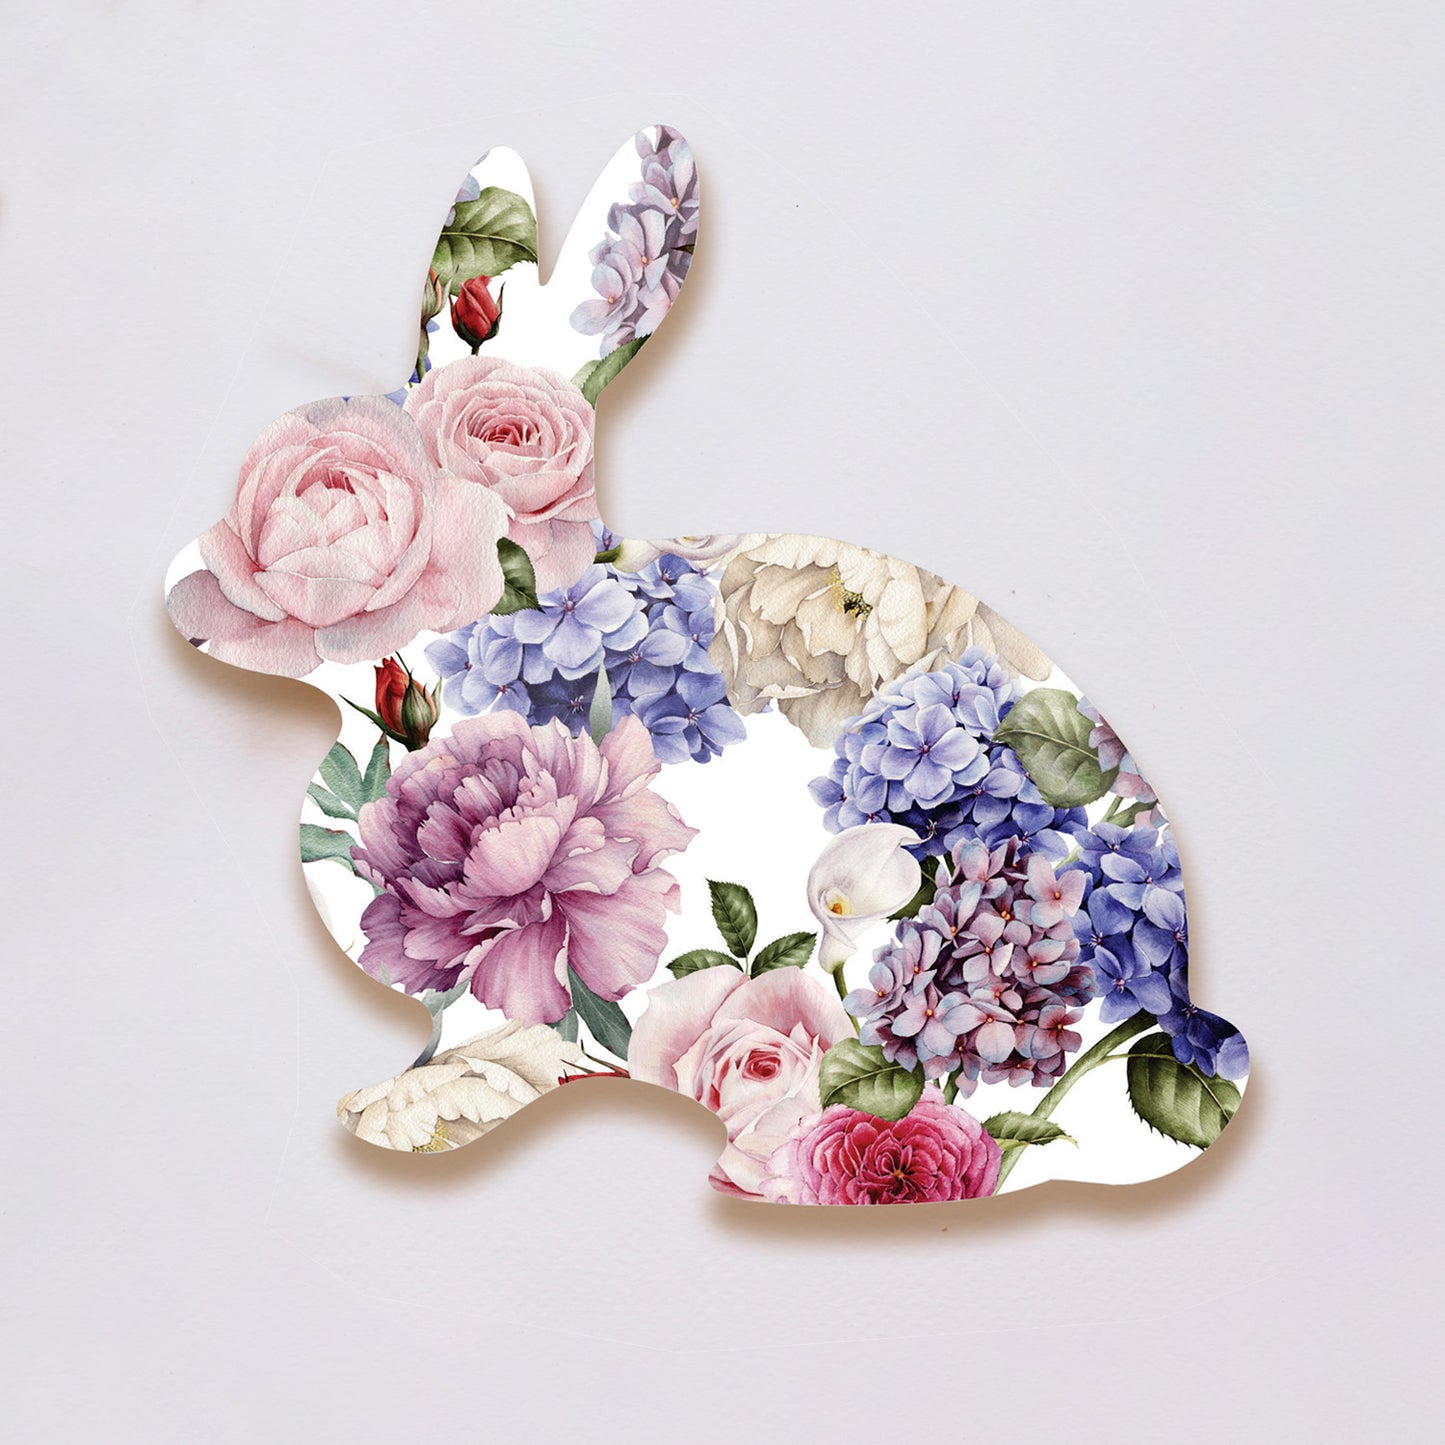 Hydrangeas and Roses Bunny shaped Platter